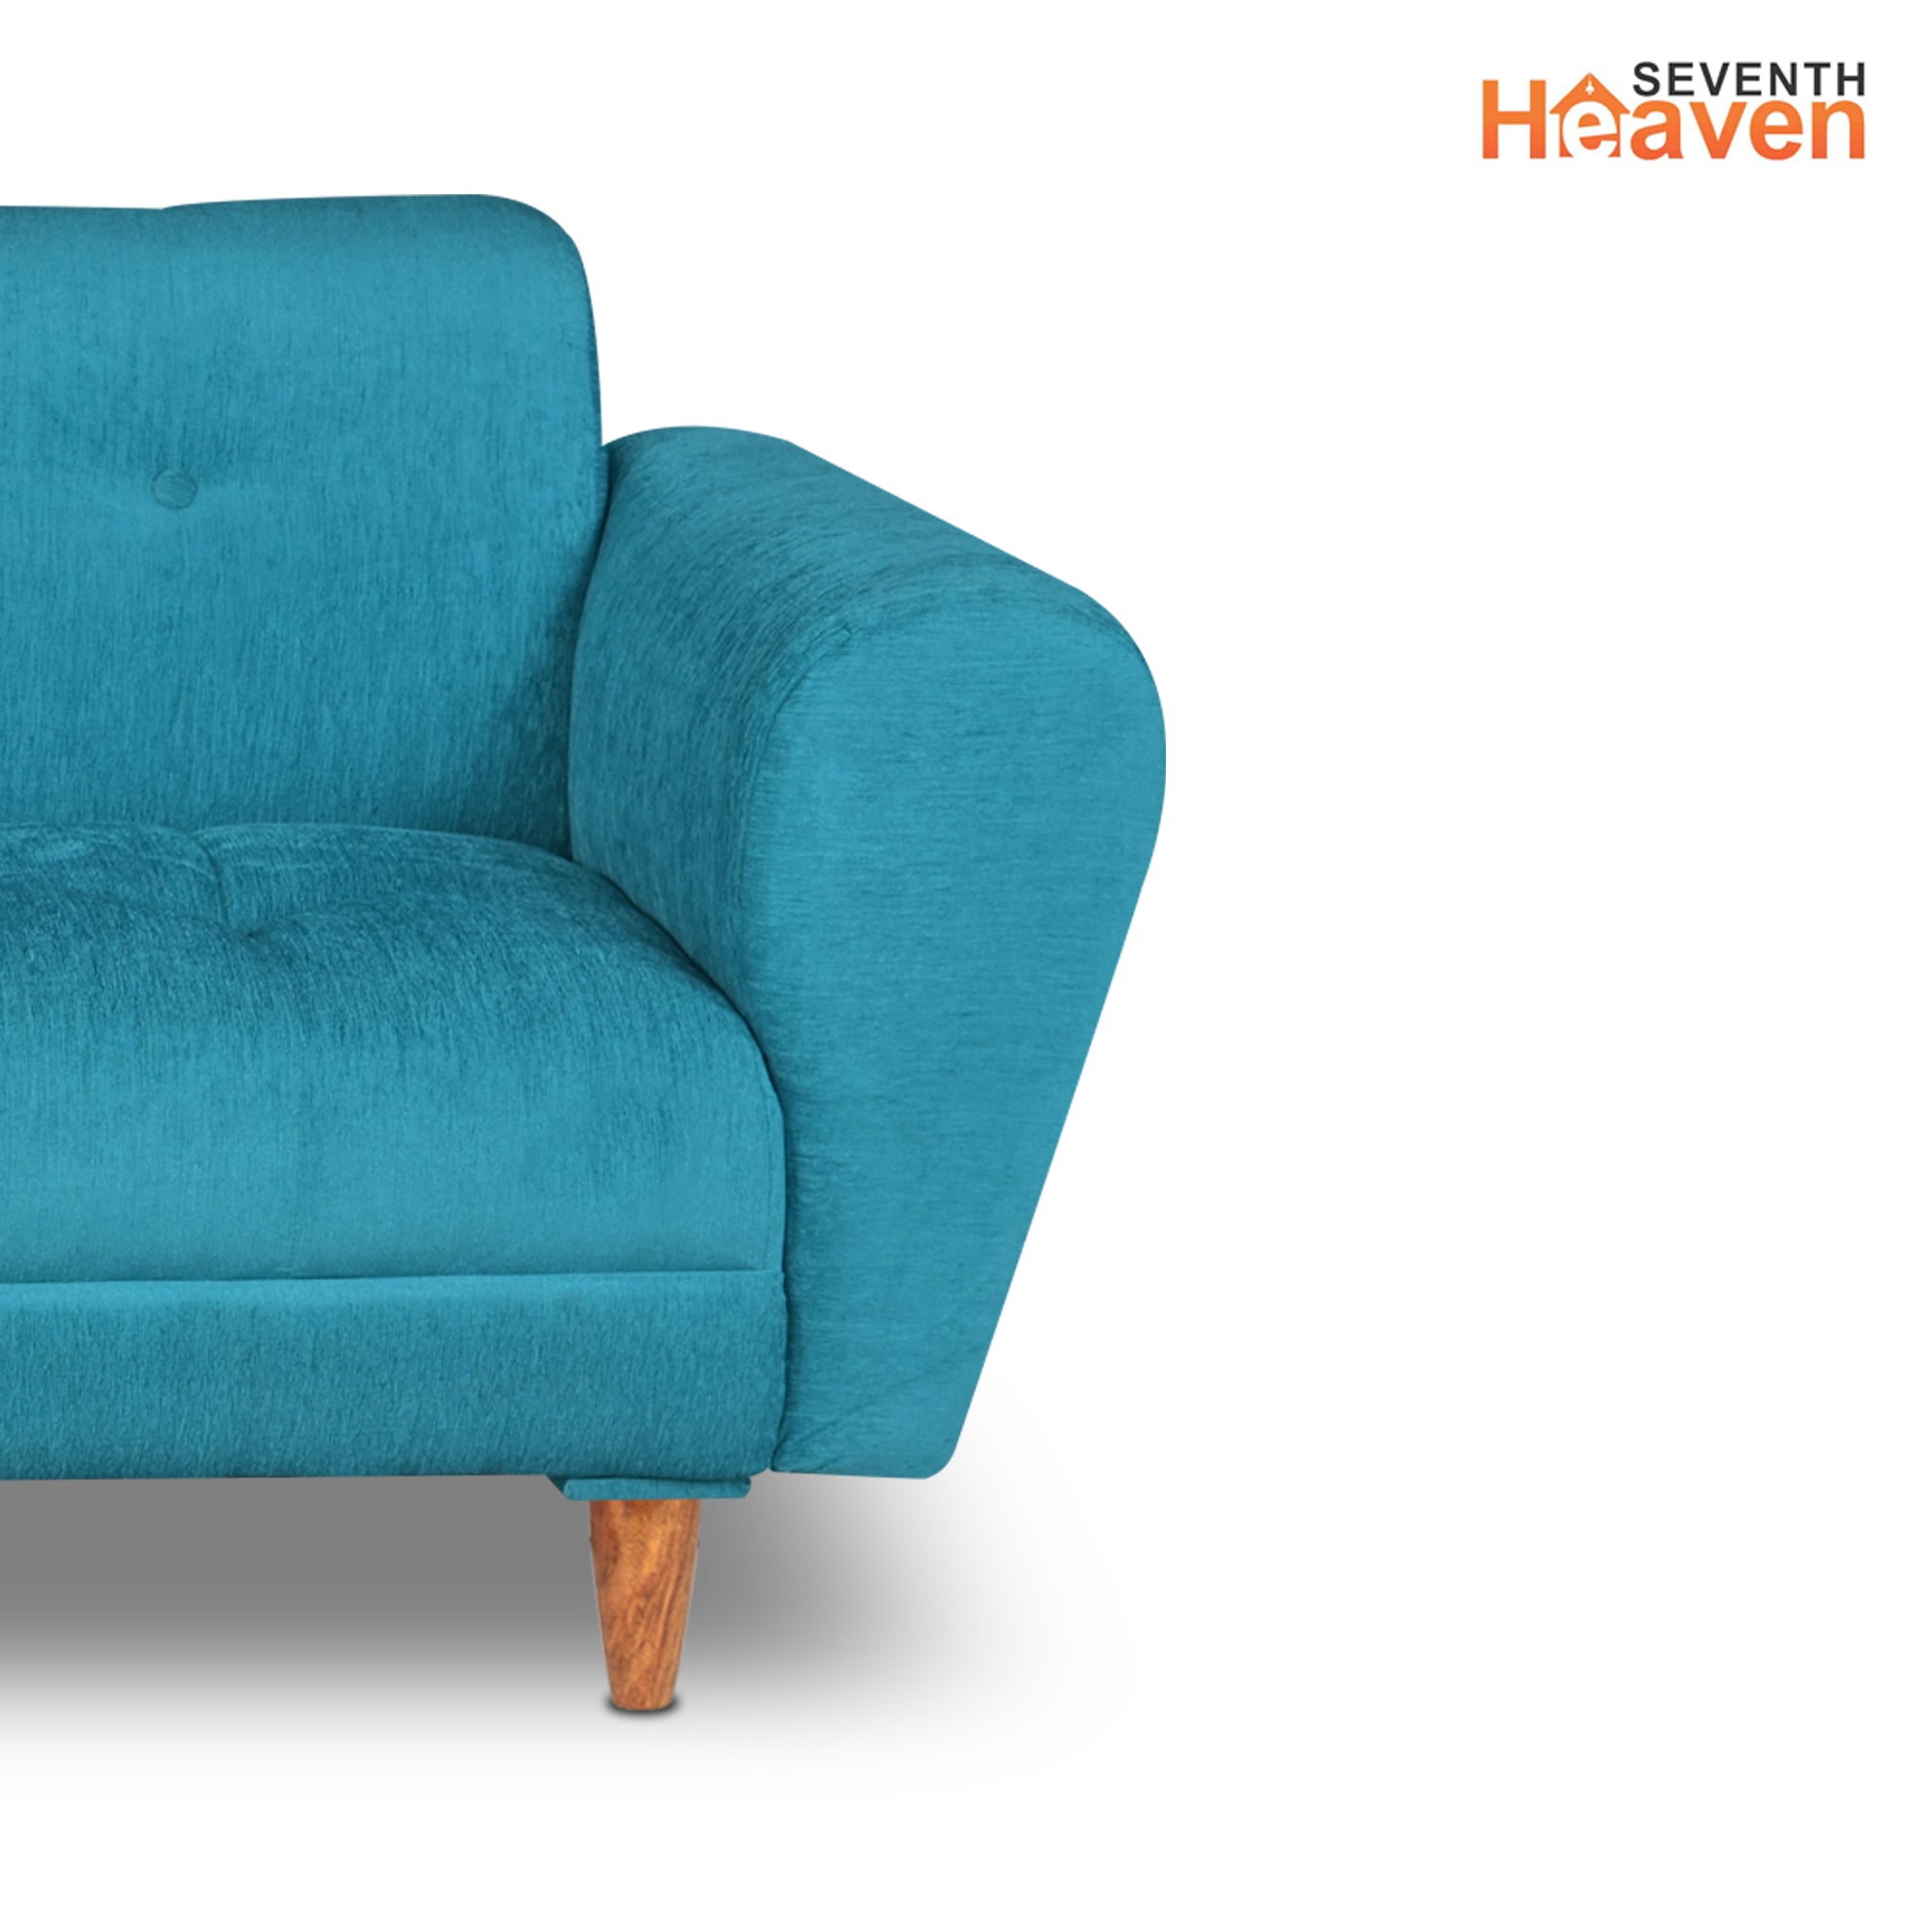 Milan 5 Seater Sofa Set, Chenille Molfino Fabric (Finish Color - Sky Blue, Style - 3 + 1 +1)